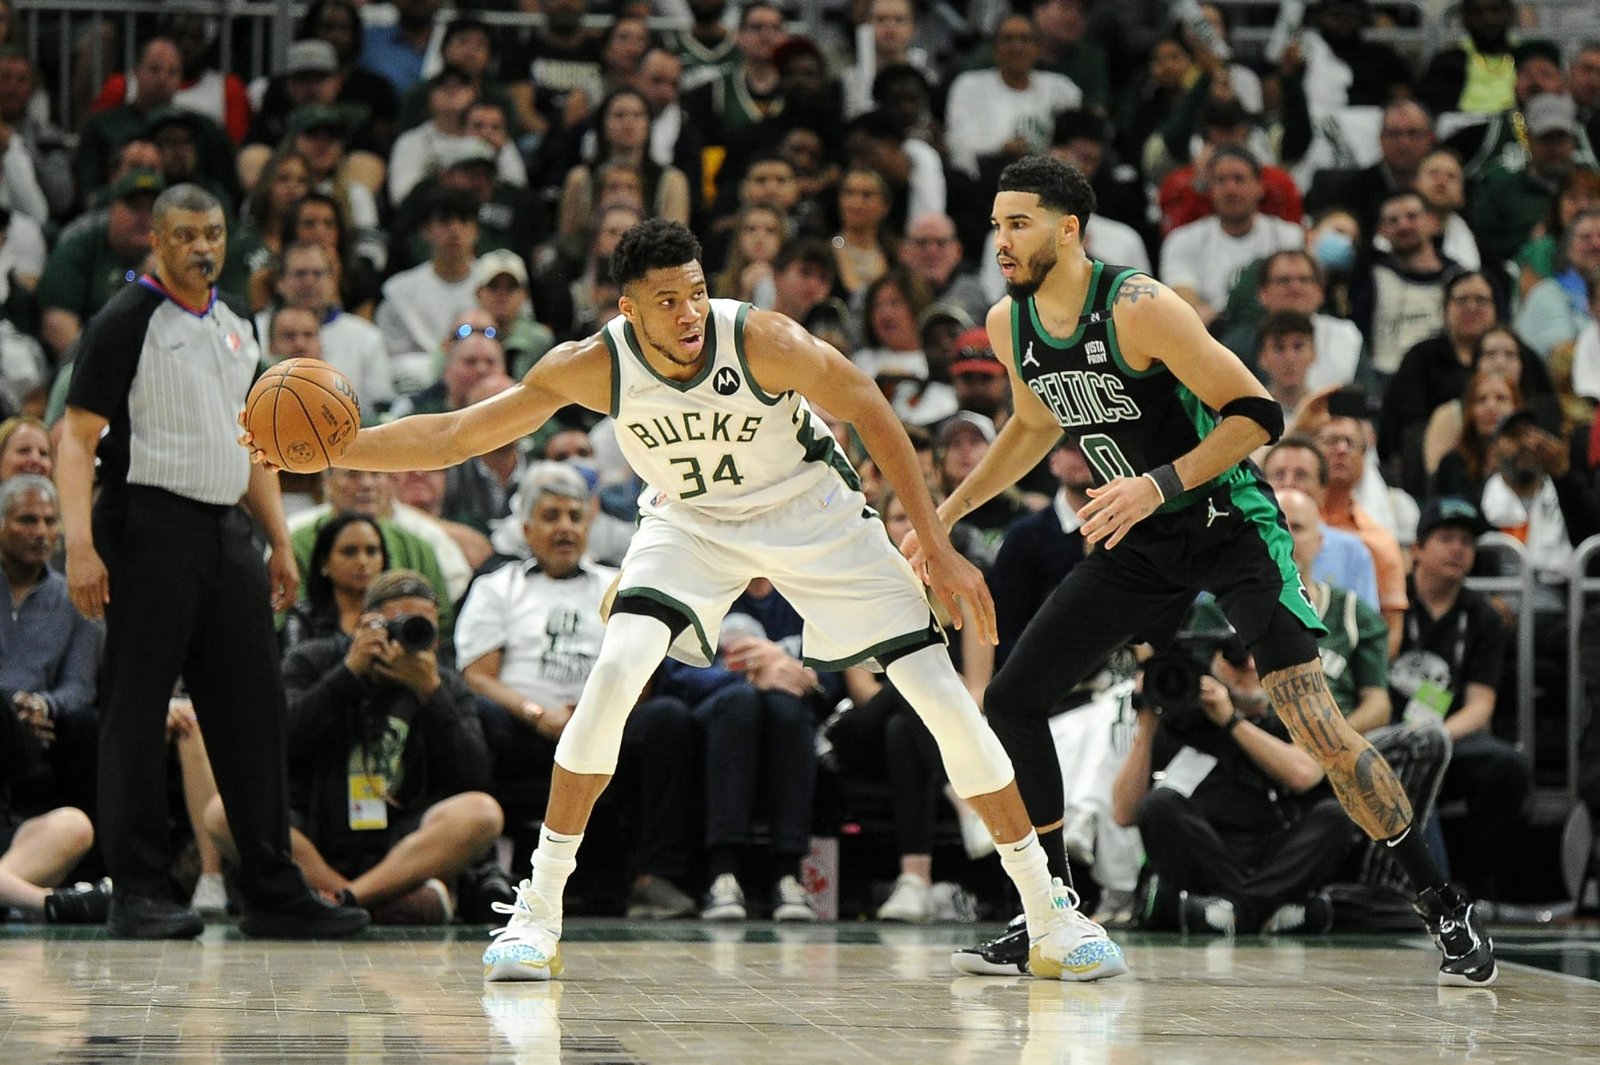 The Whiteboard: The Celtics defense is putting Giannis Antetokounmpo on an island